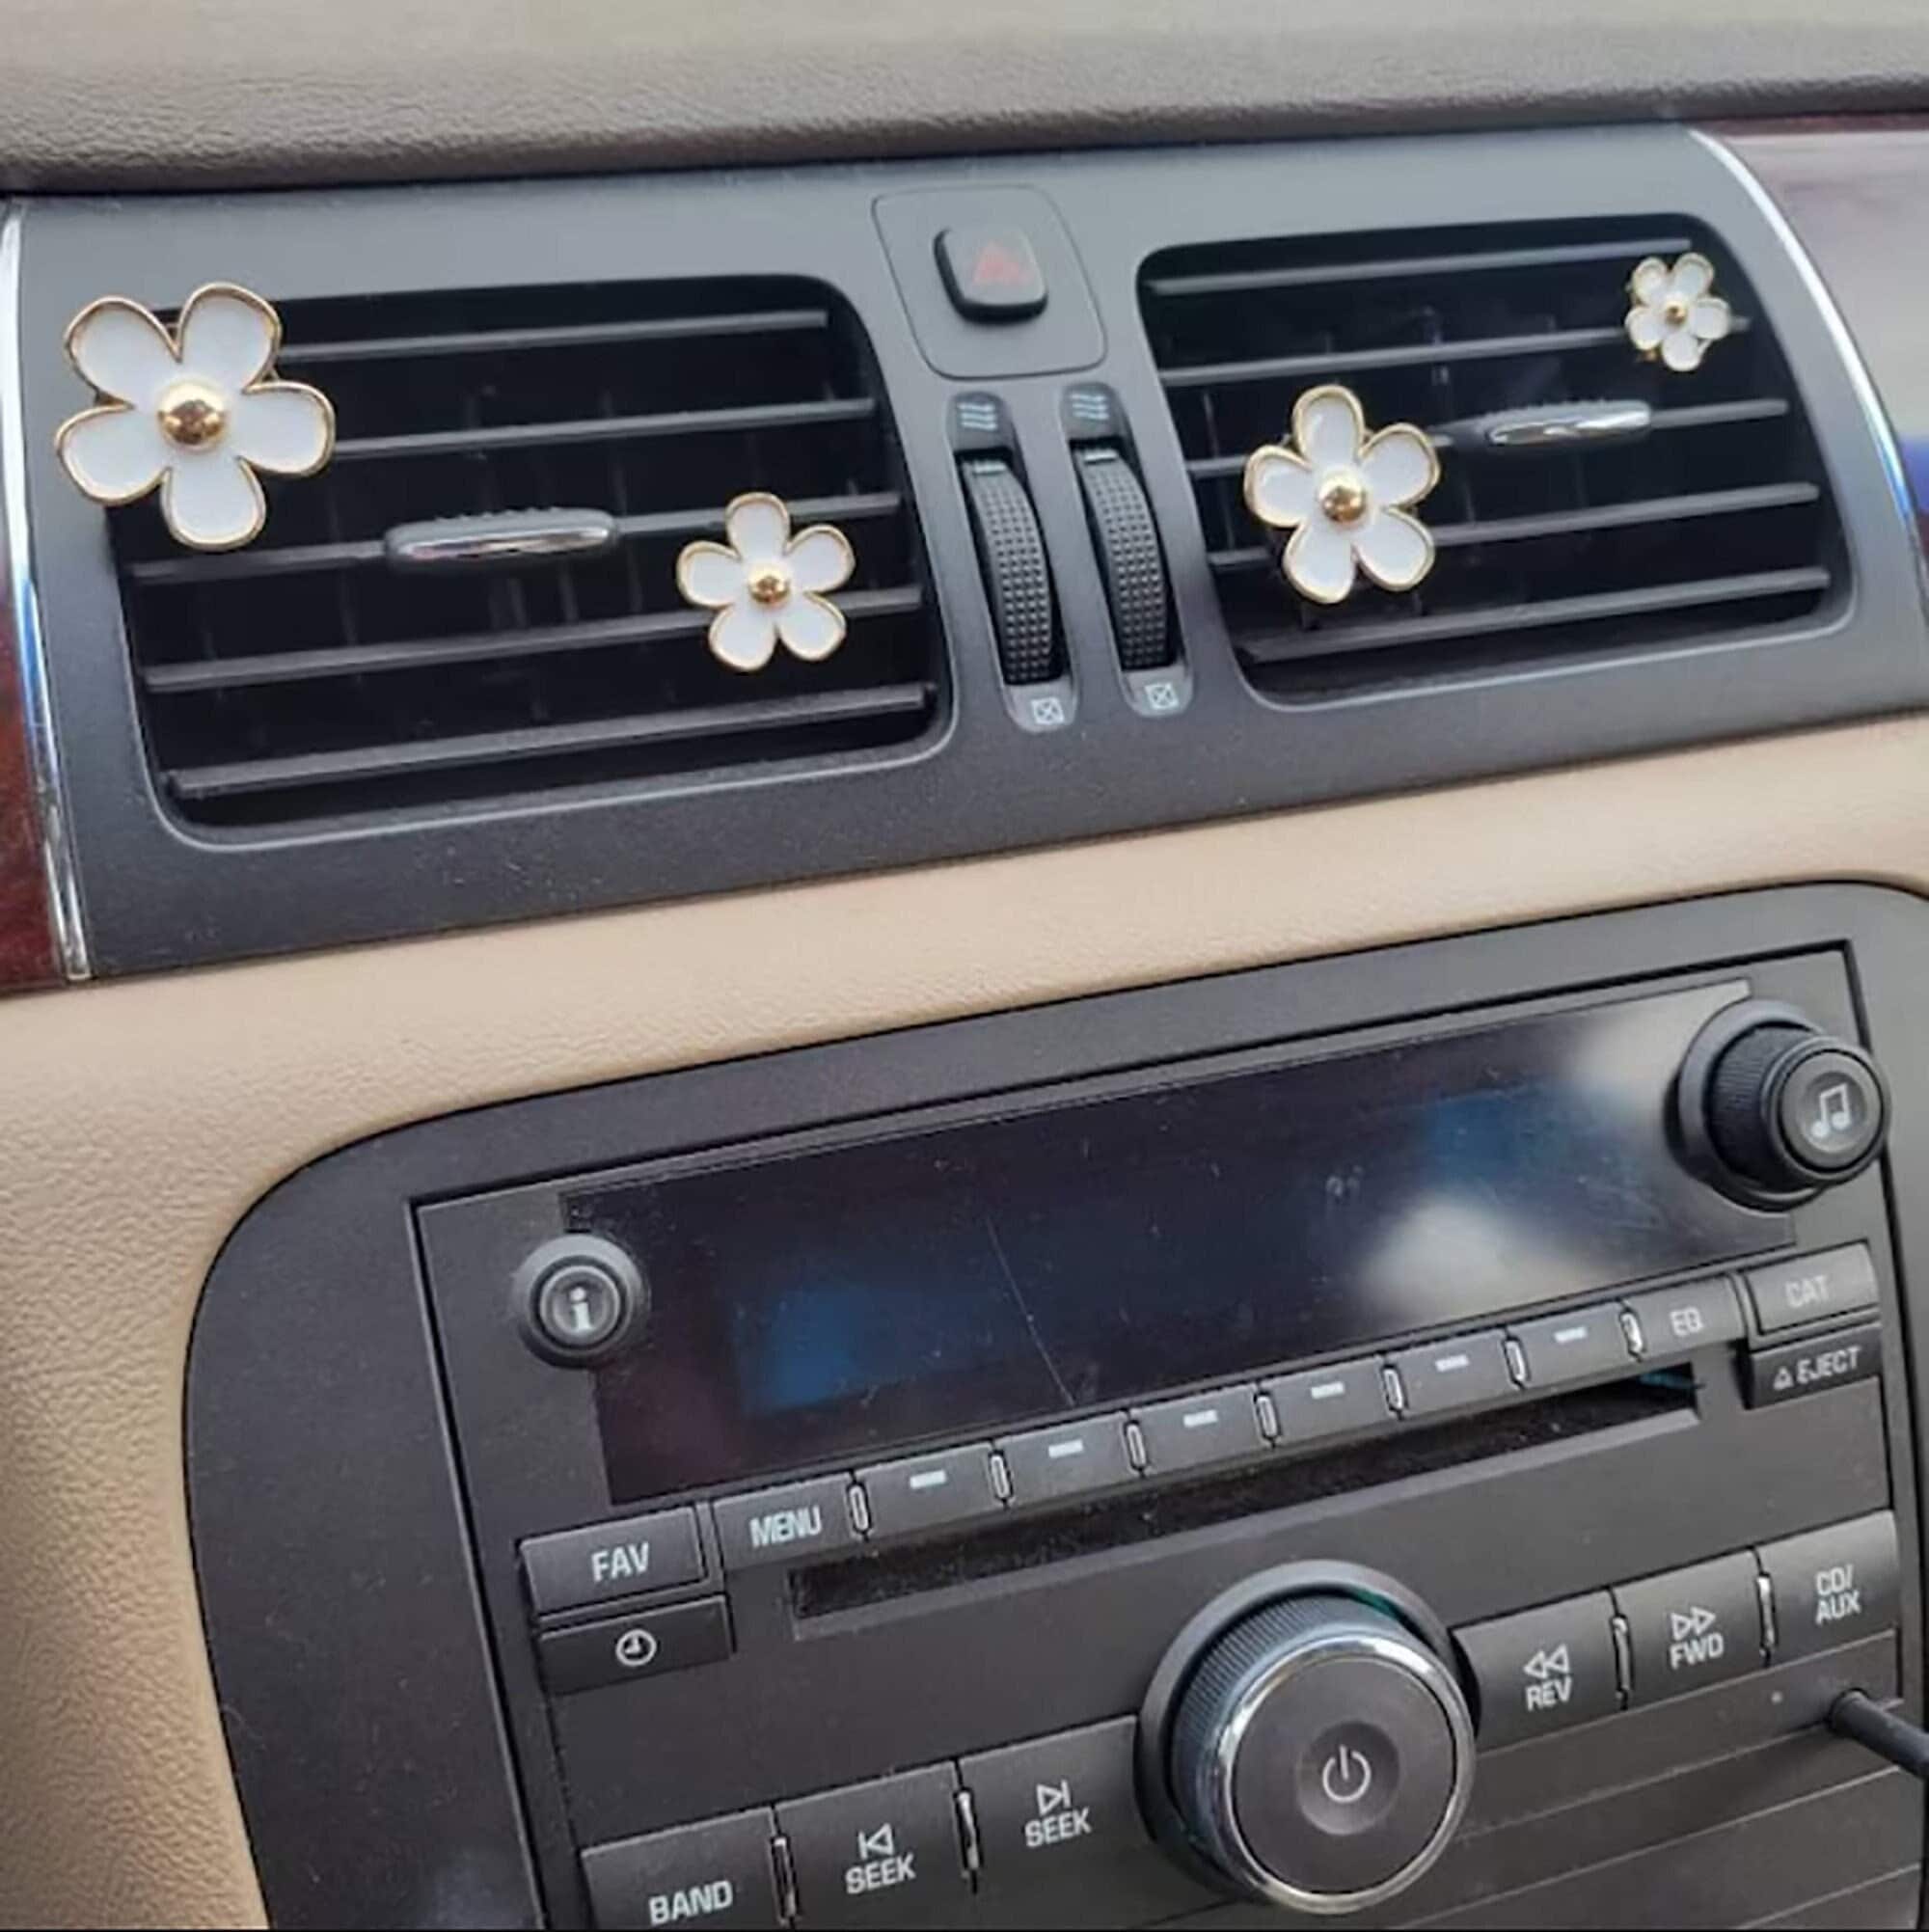 Kawaii Air Vent Clip Air Conditioning Car Interior Decor Car Decoration